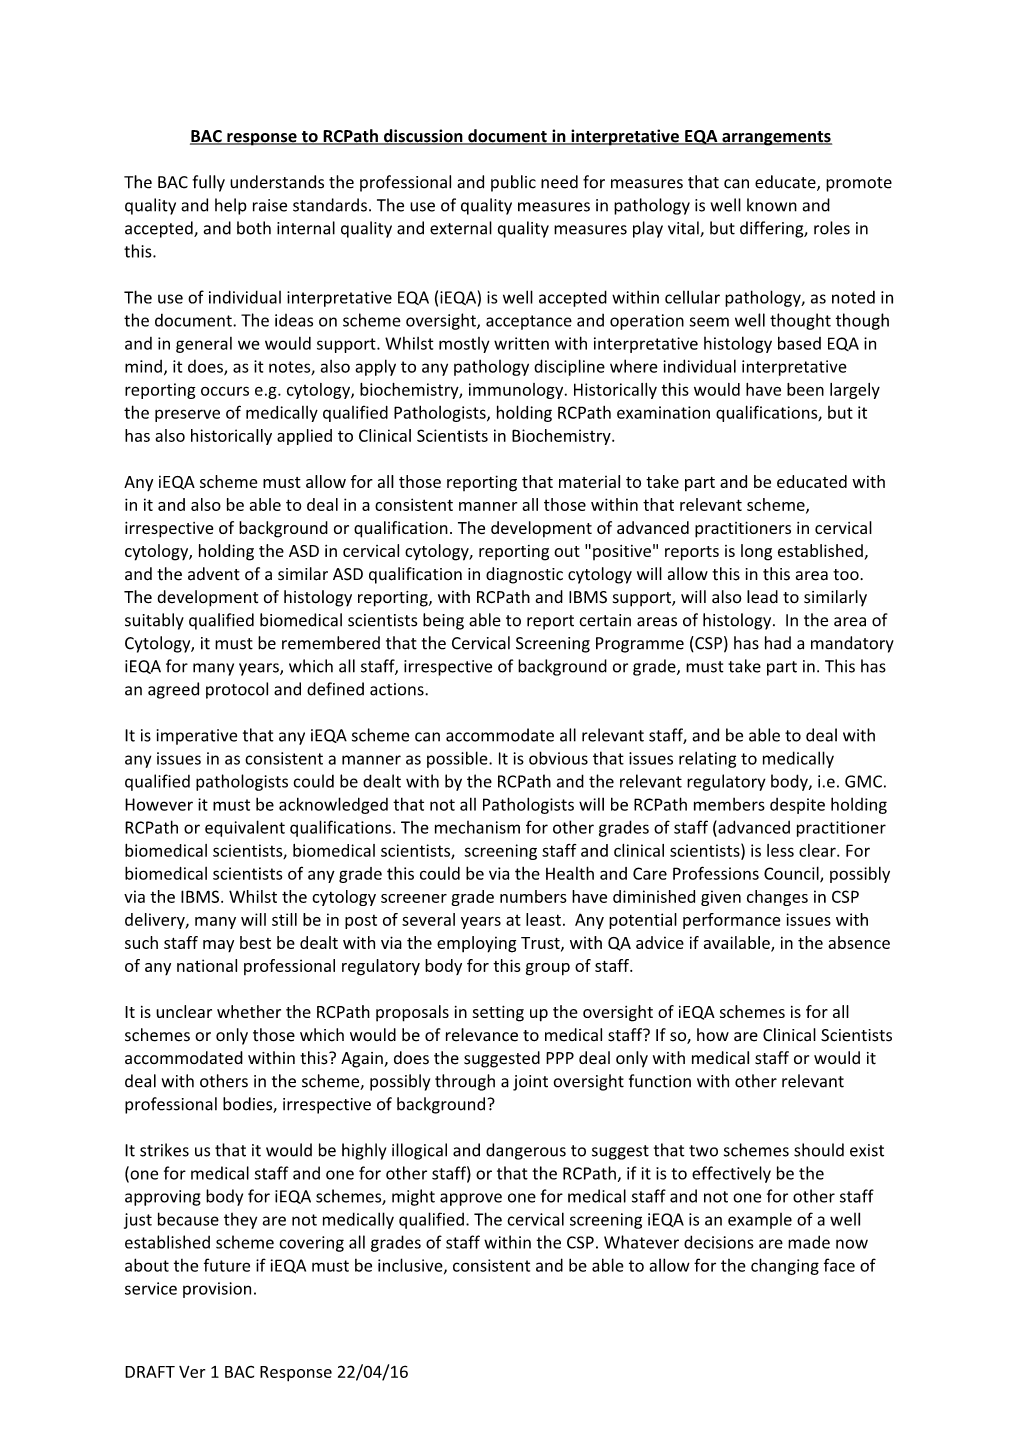 BAC Response to Rcpath Discussion Document in Interpretative EQA Arrangements